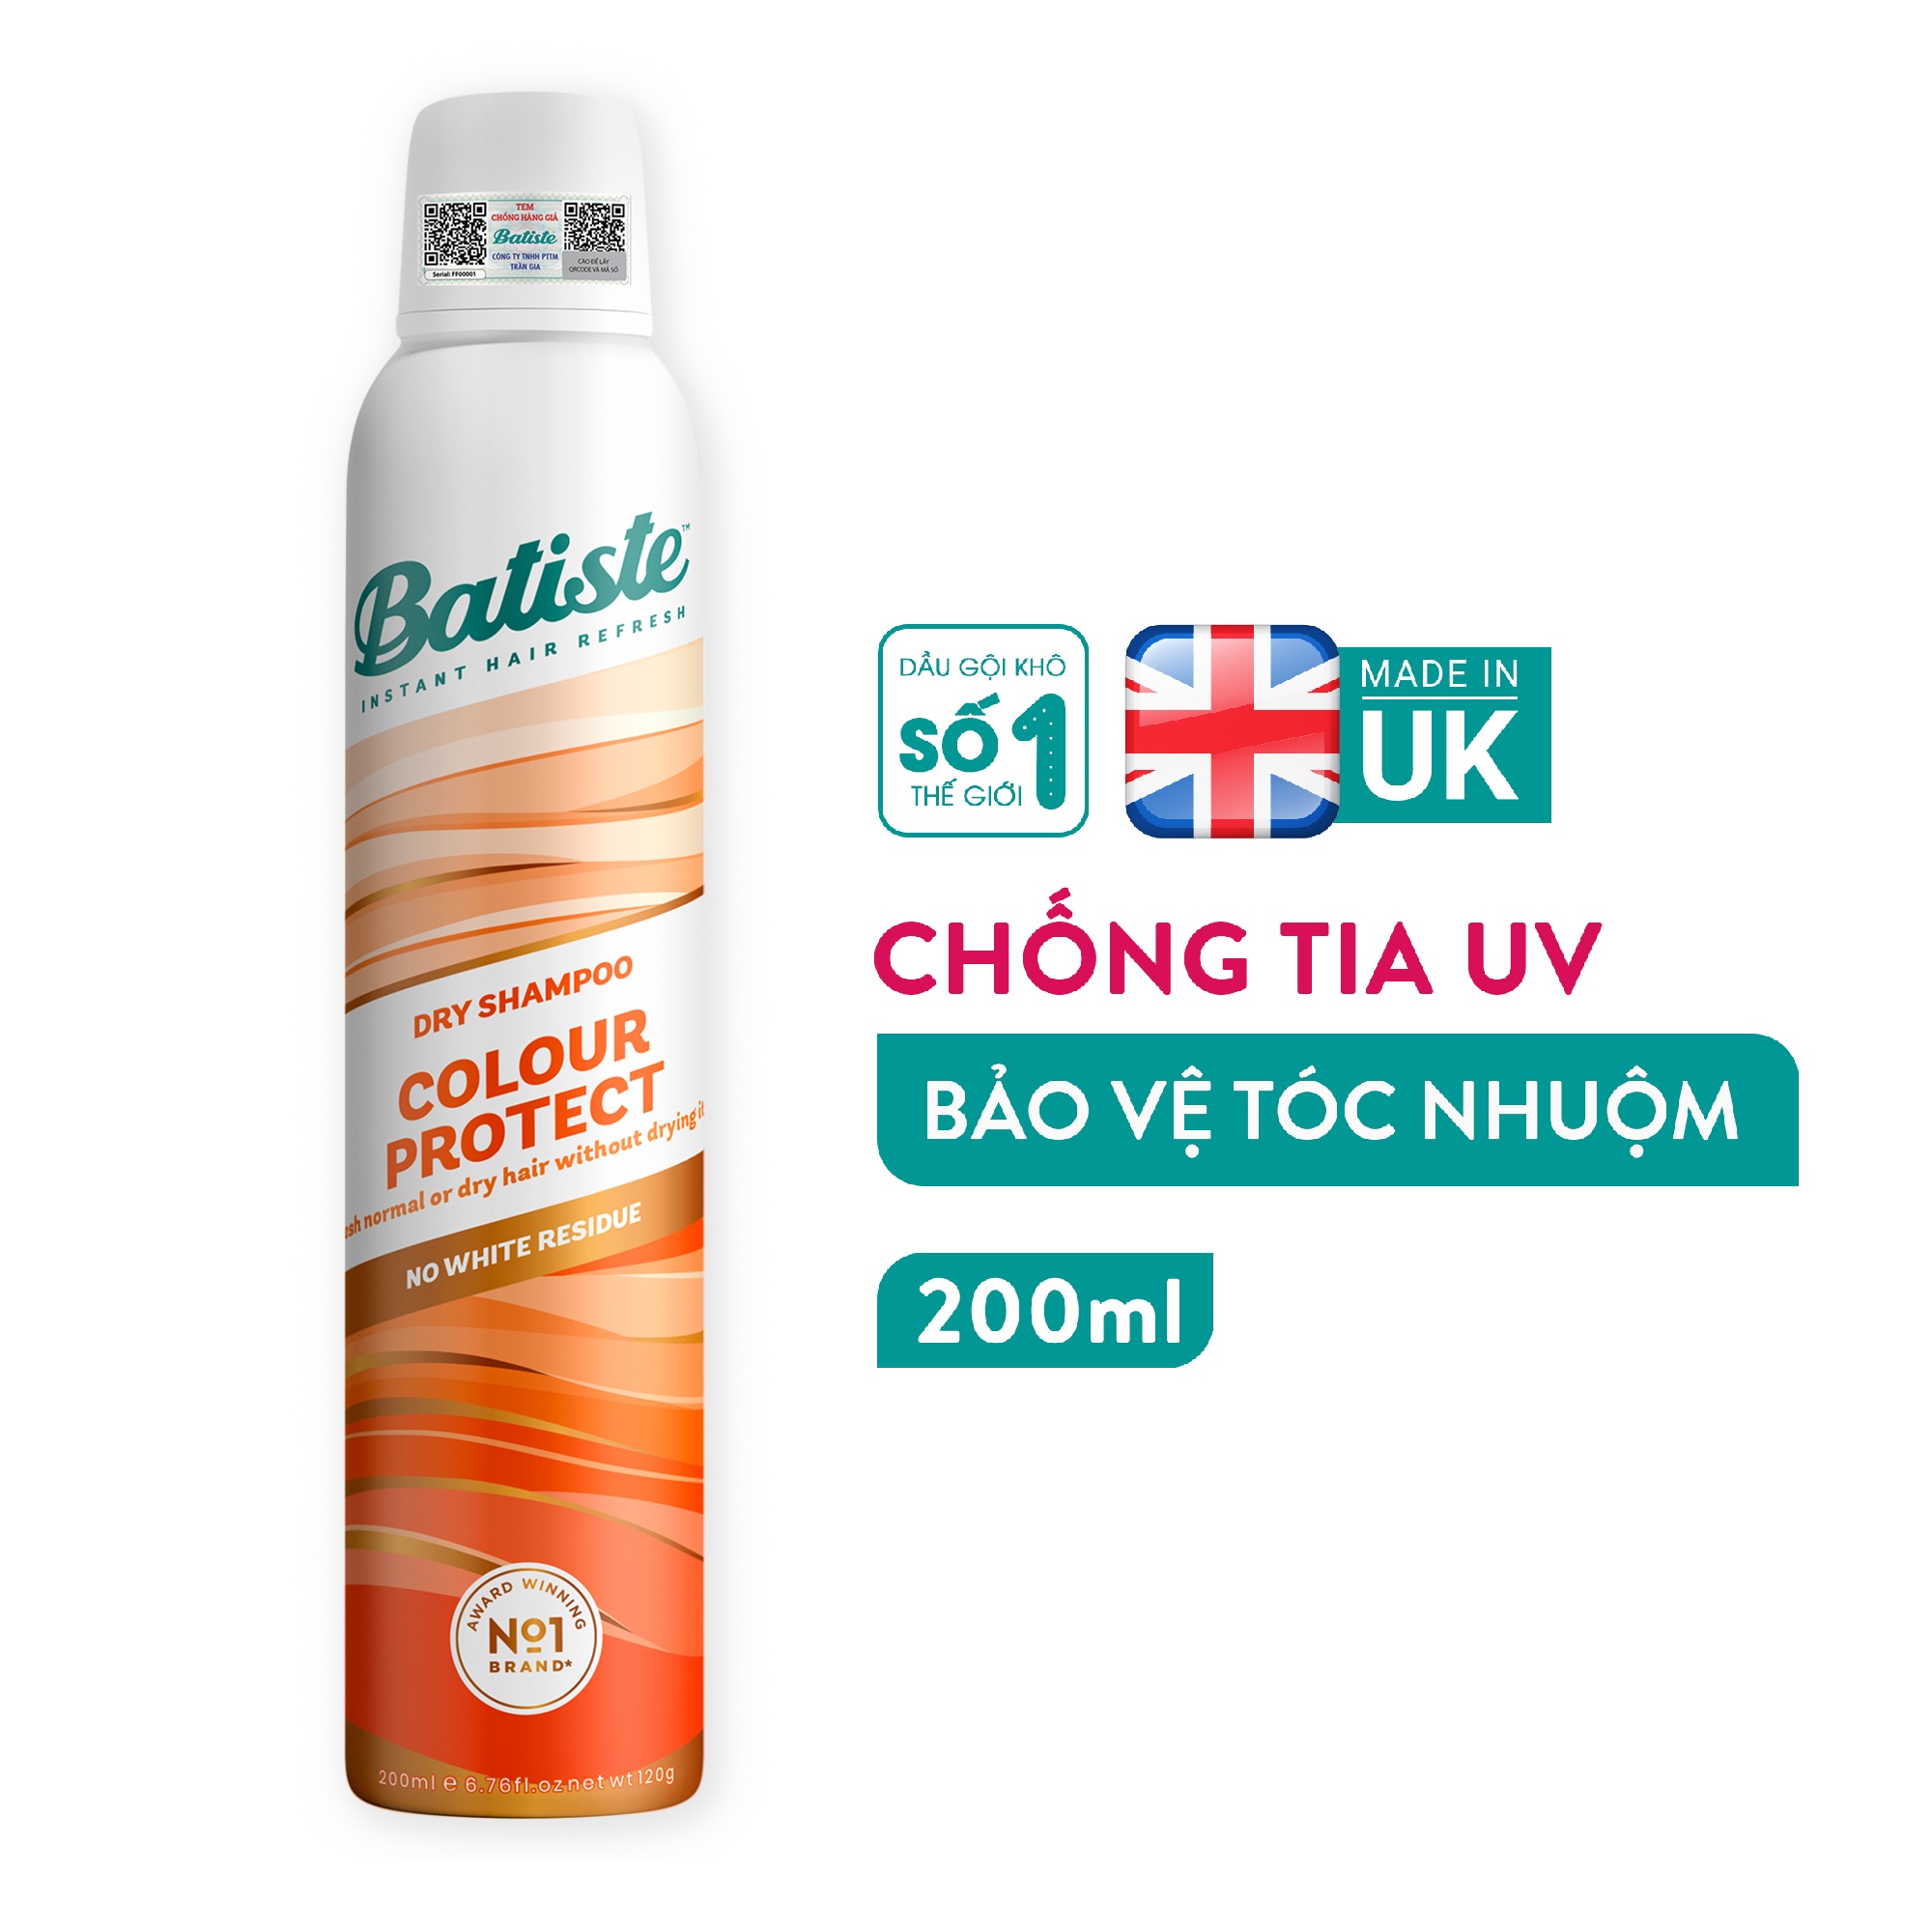 Dầu Gội Khô Batiste Dry Shampoo Colour Protect Helps Prevent Colour Fade 200ml